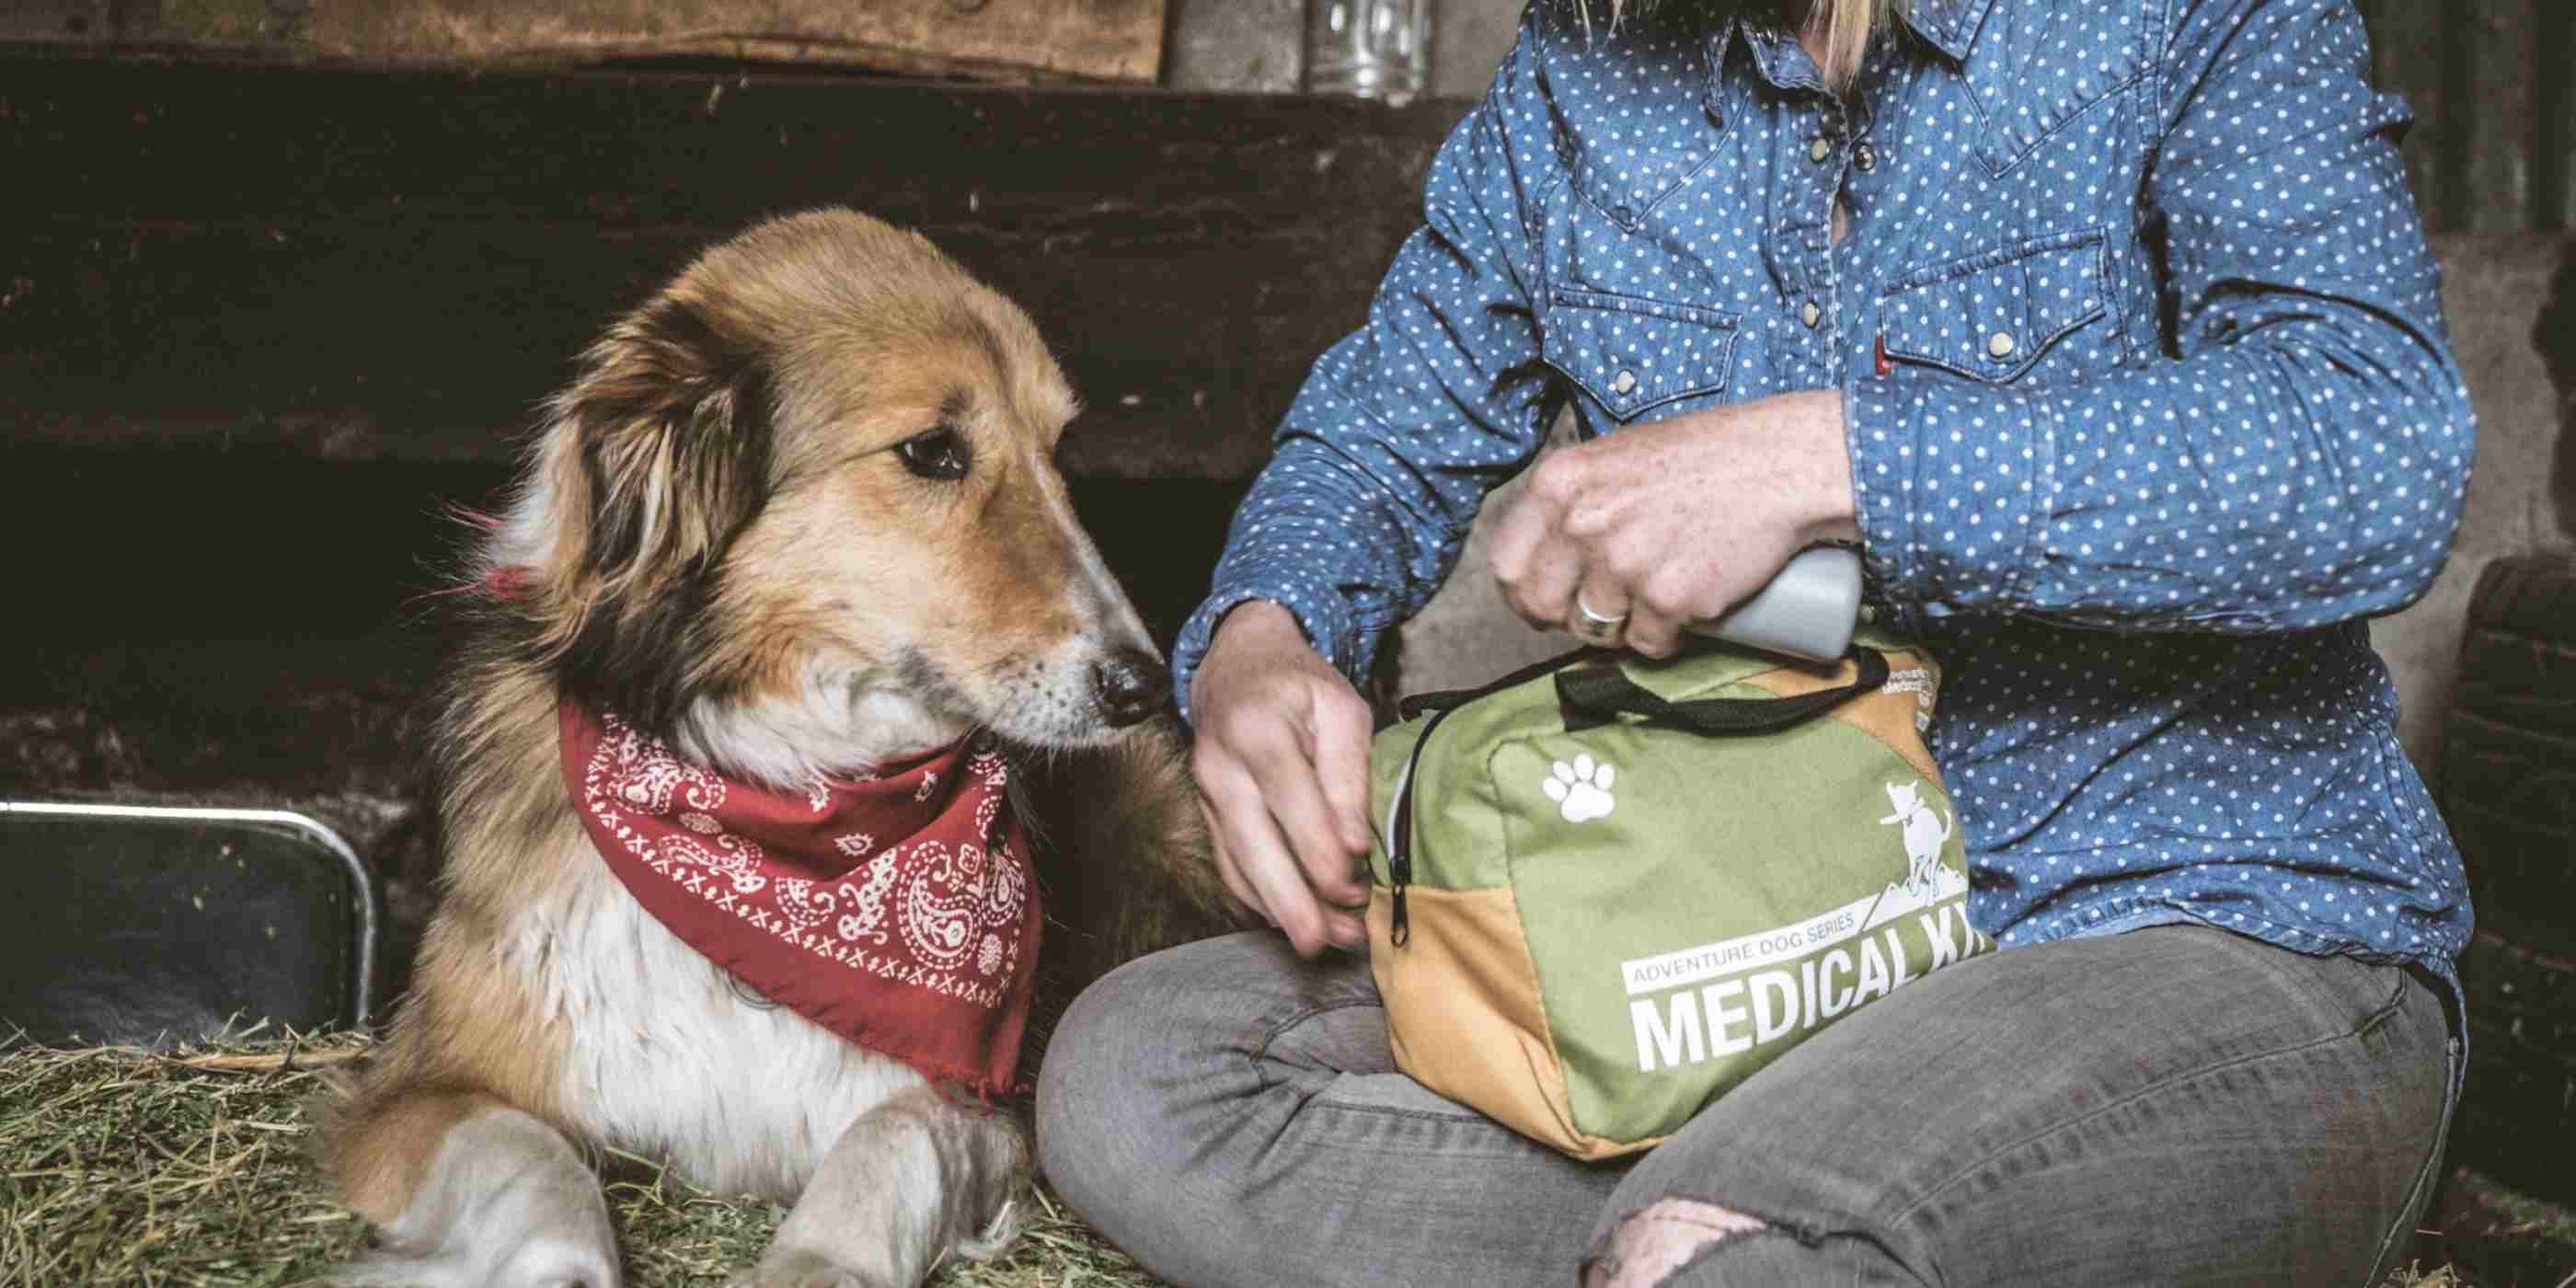 Adventure Dog Medical Kit - Workin' Dog woman opening kit next to dog with red bandana